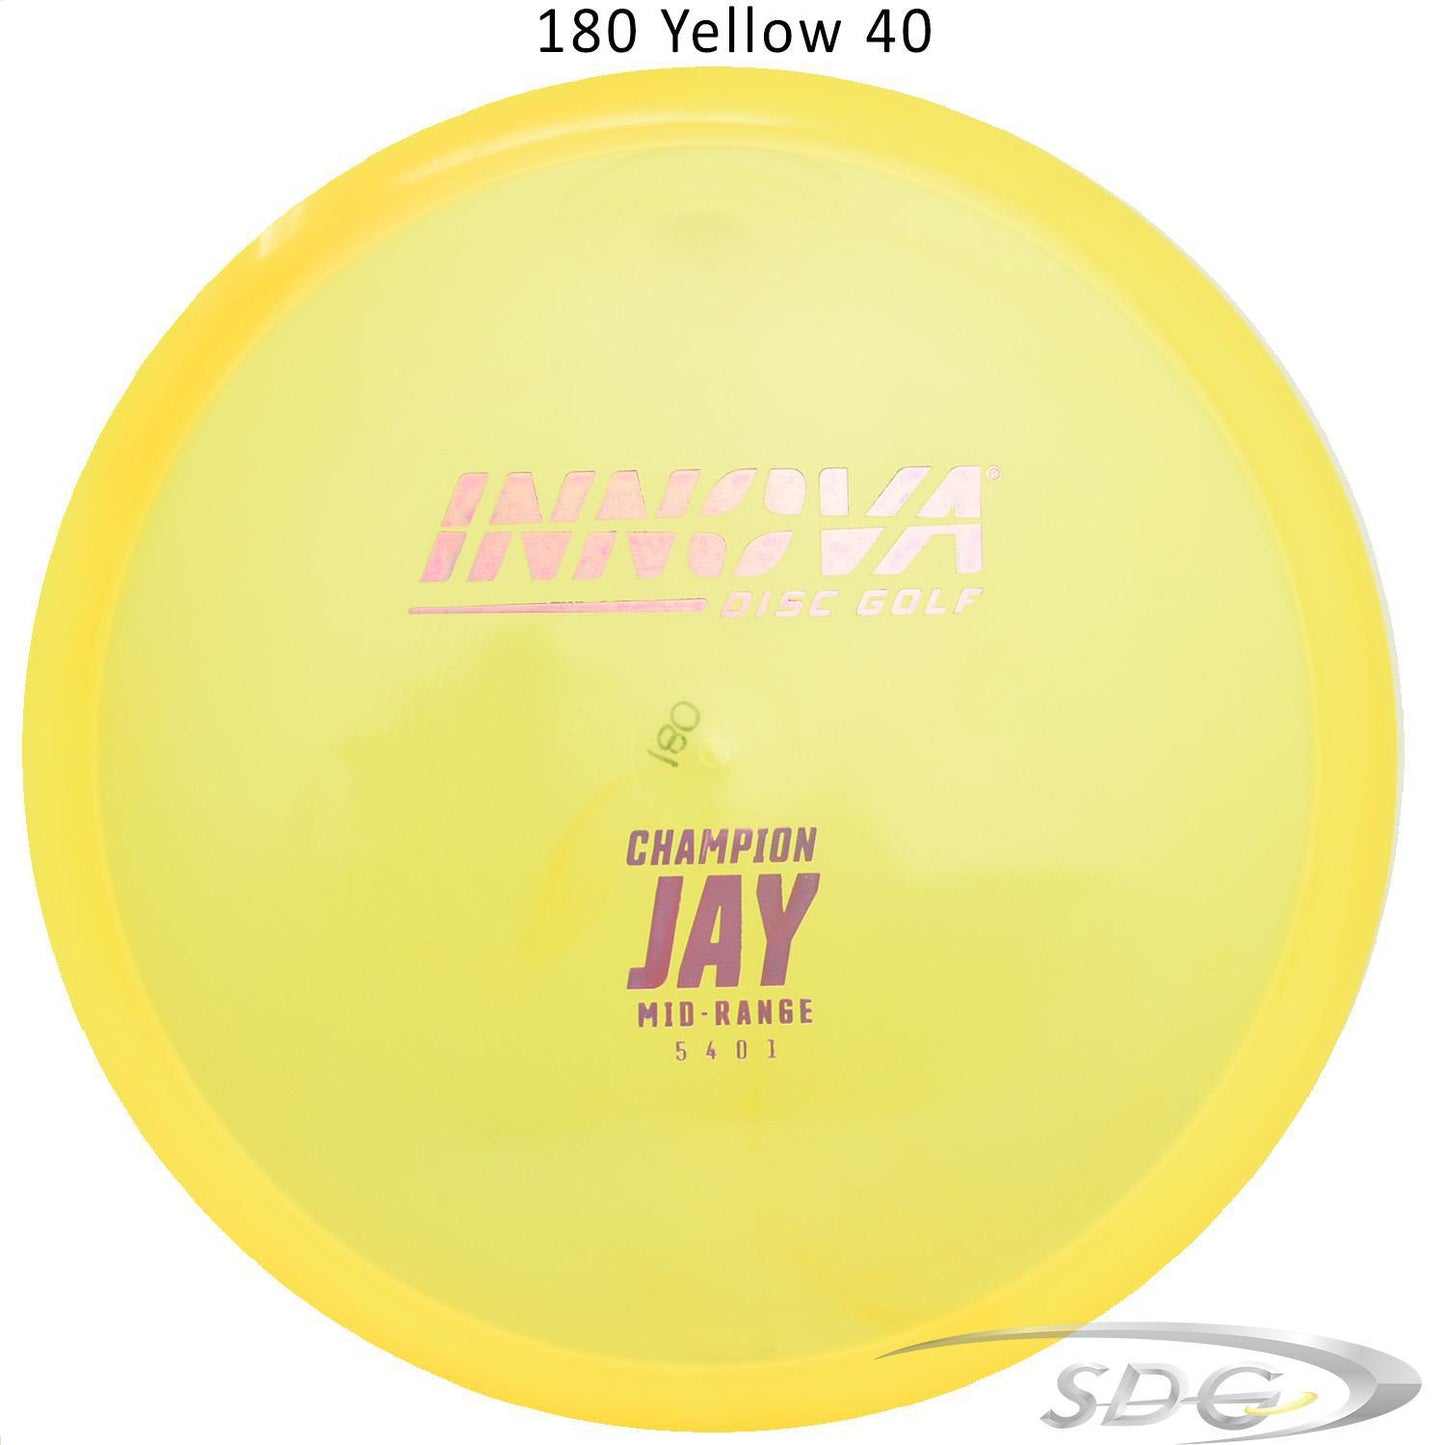 innova-champion-jay-disc-golf-mid-range 180 Yellow 40 